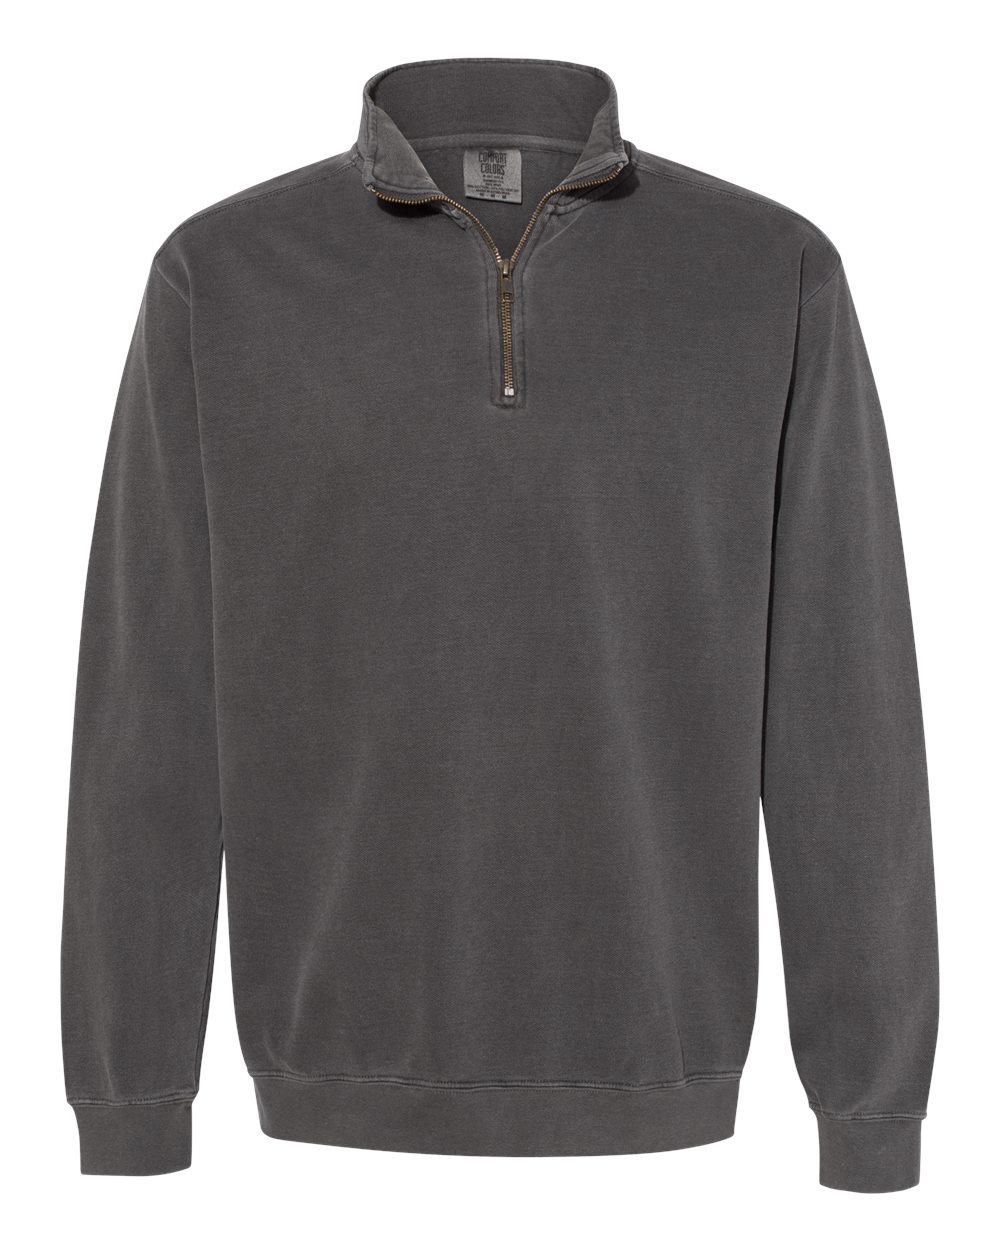 Comfort Colors Mens Quarter Zip Sweatshirt Crewneck 1580 up to 3XL | eBay